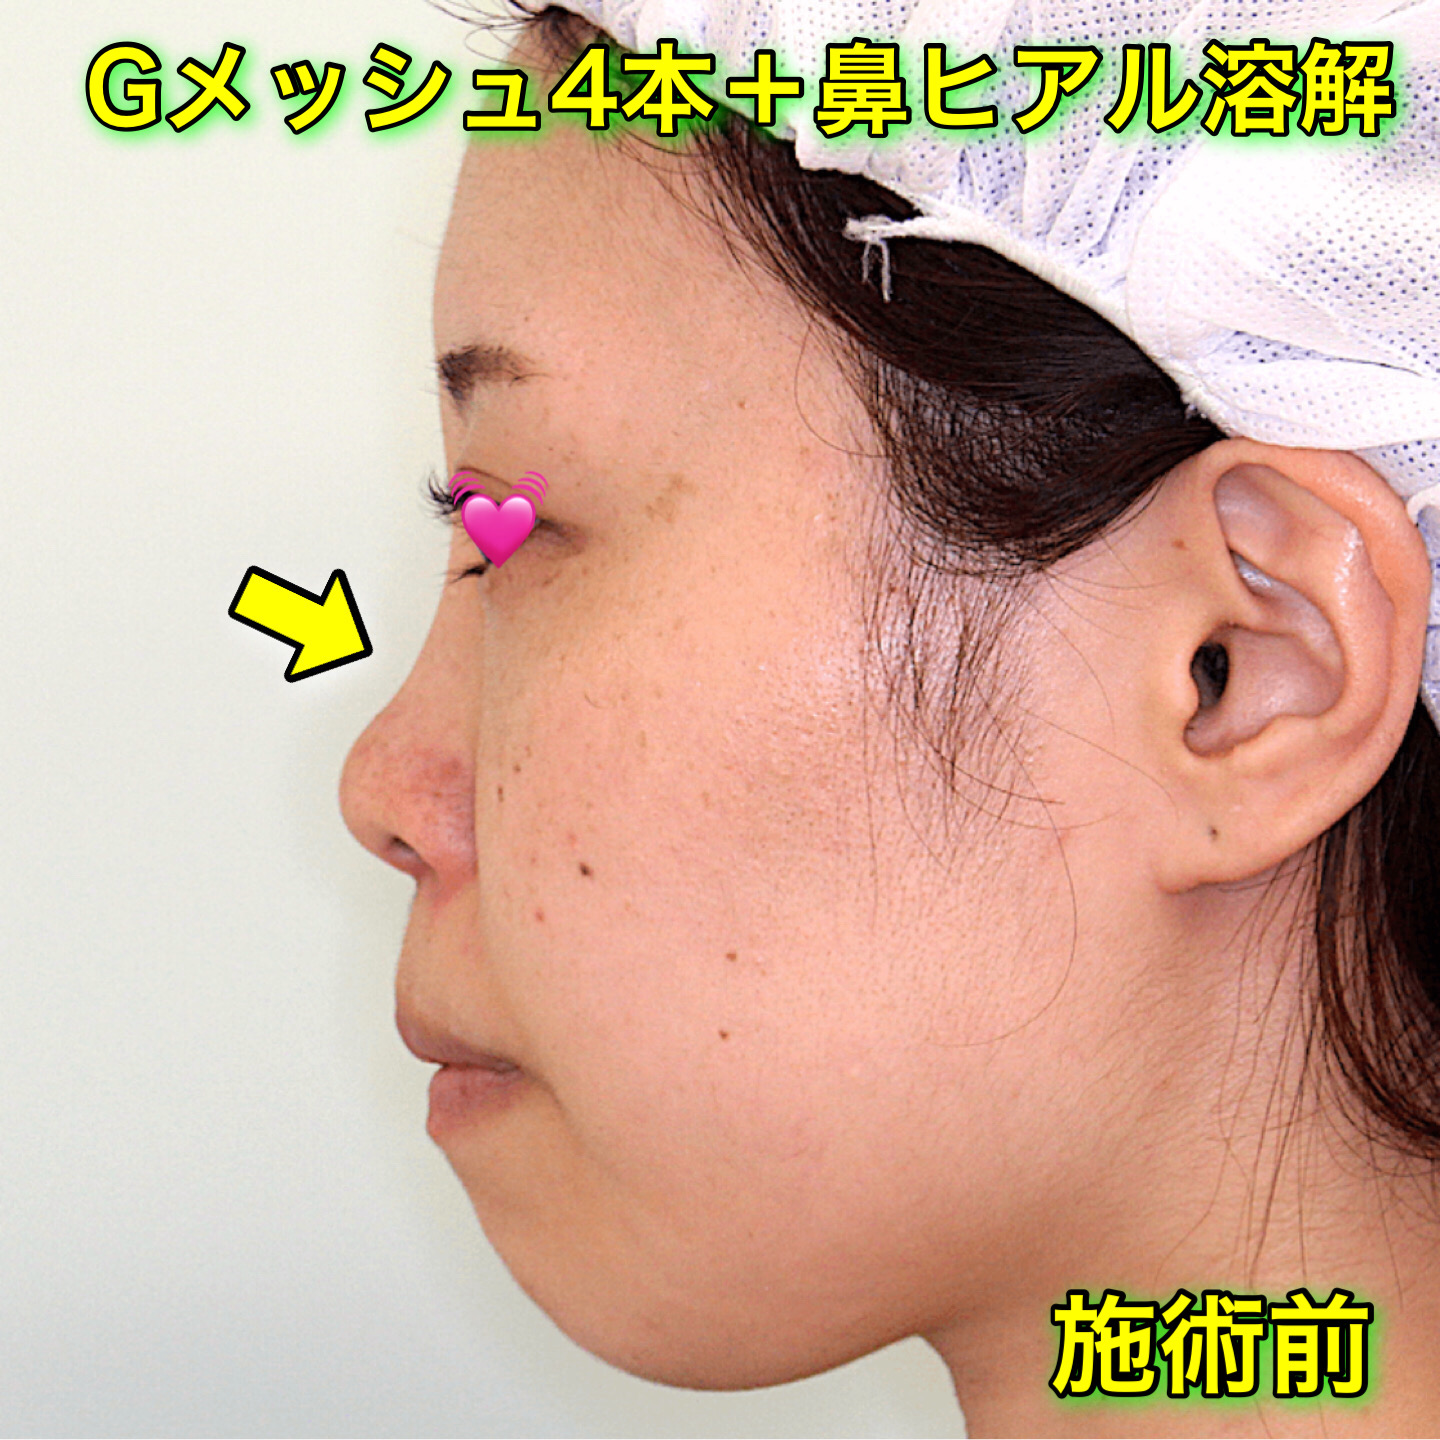 Gメッシュ（鼻）の症例写真 Before After